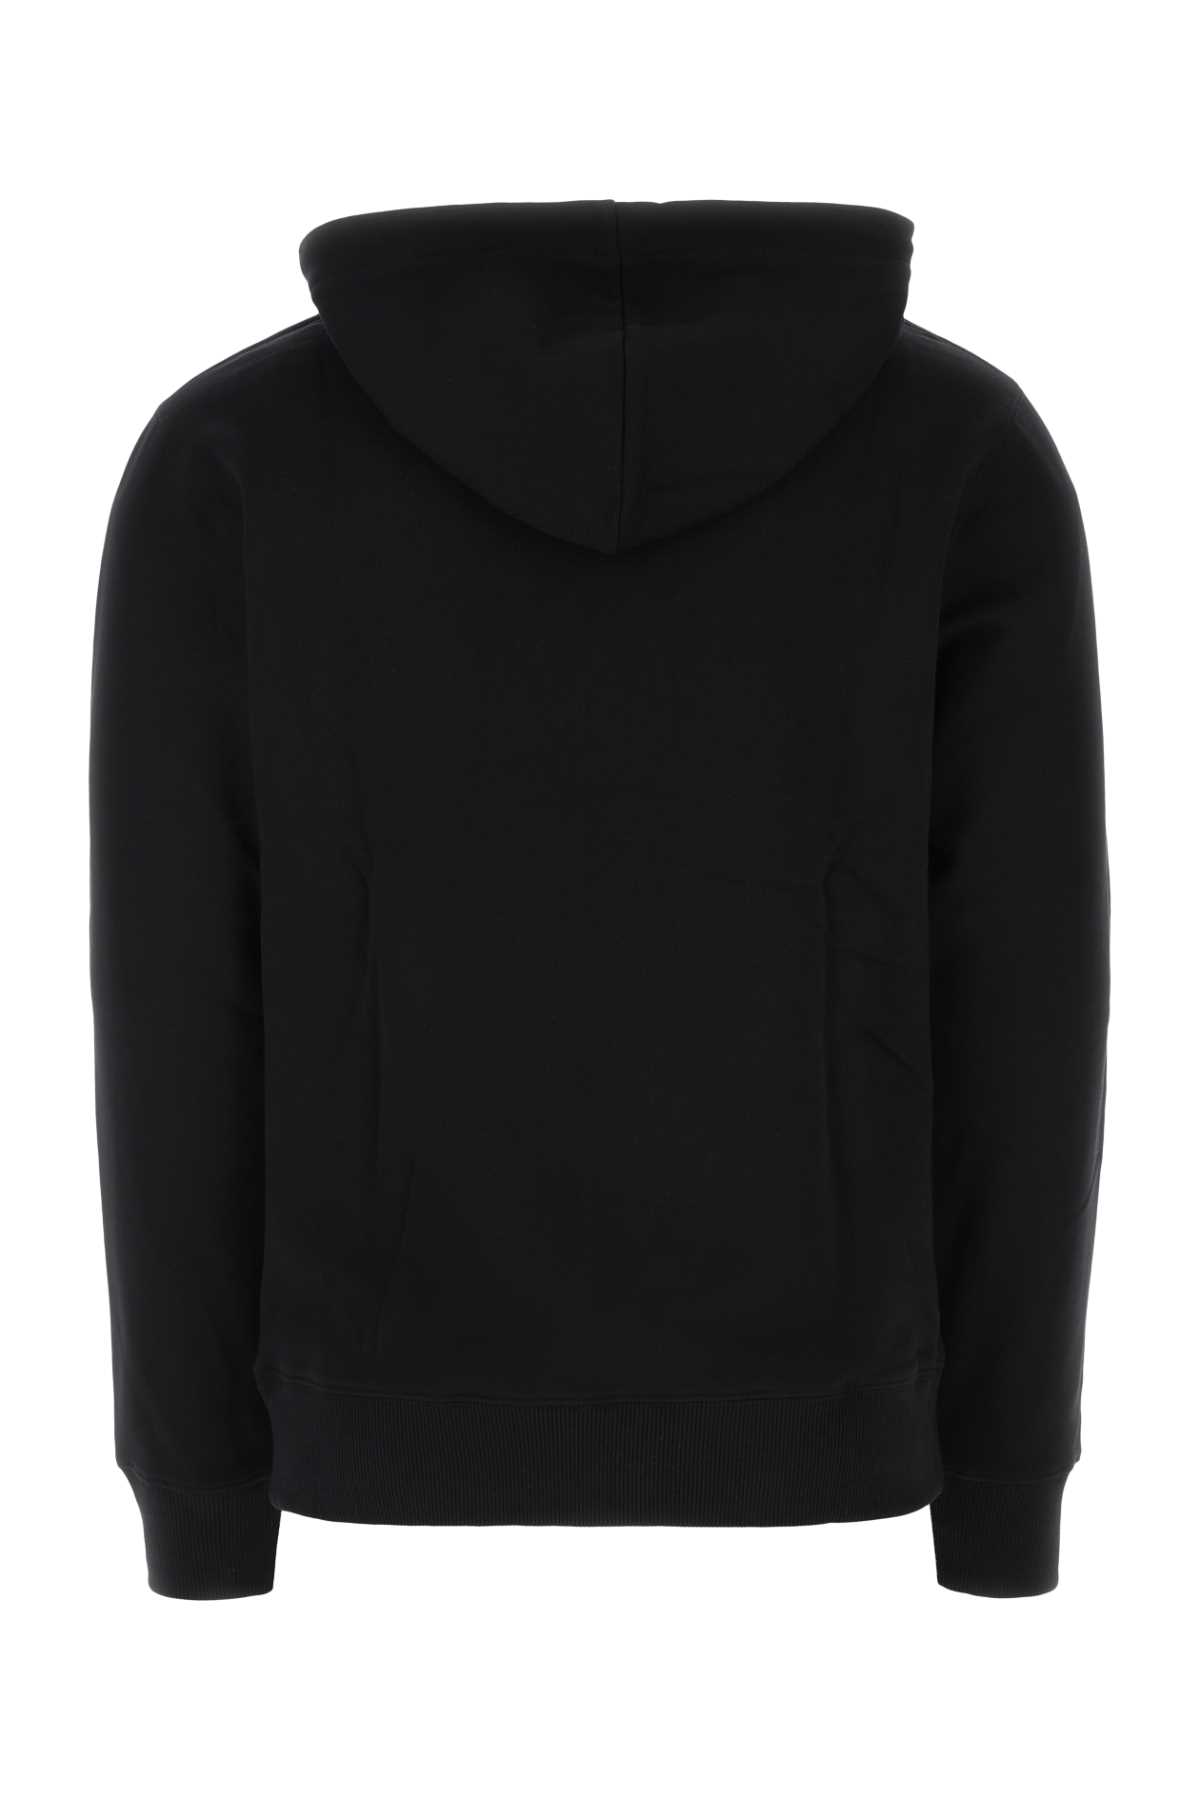 Etudes Studio Black Cotton Sweatshirt